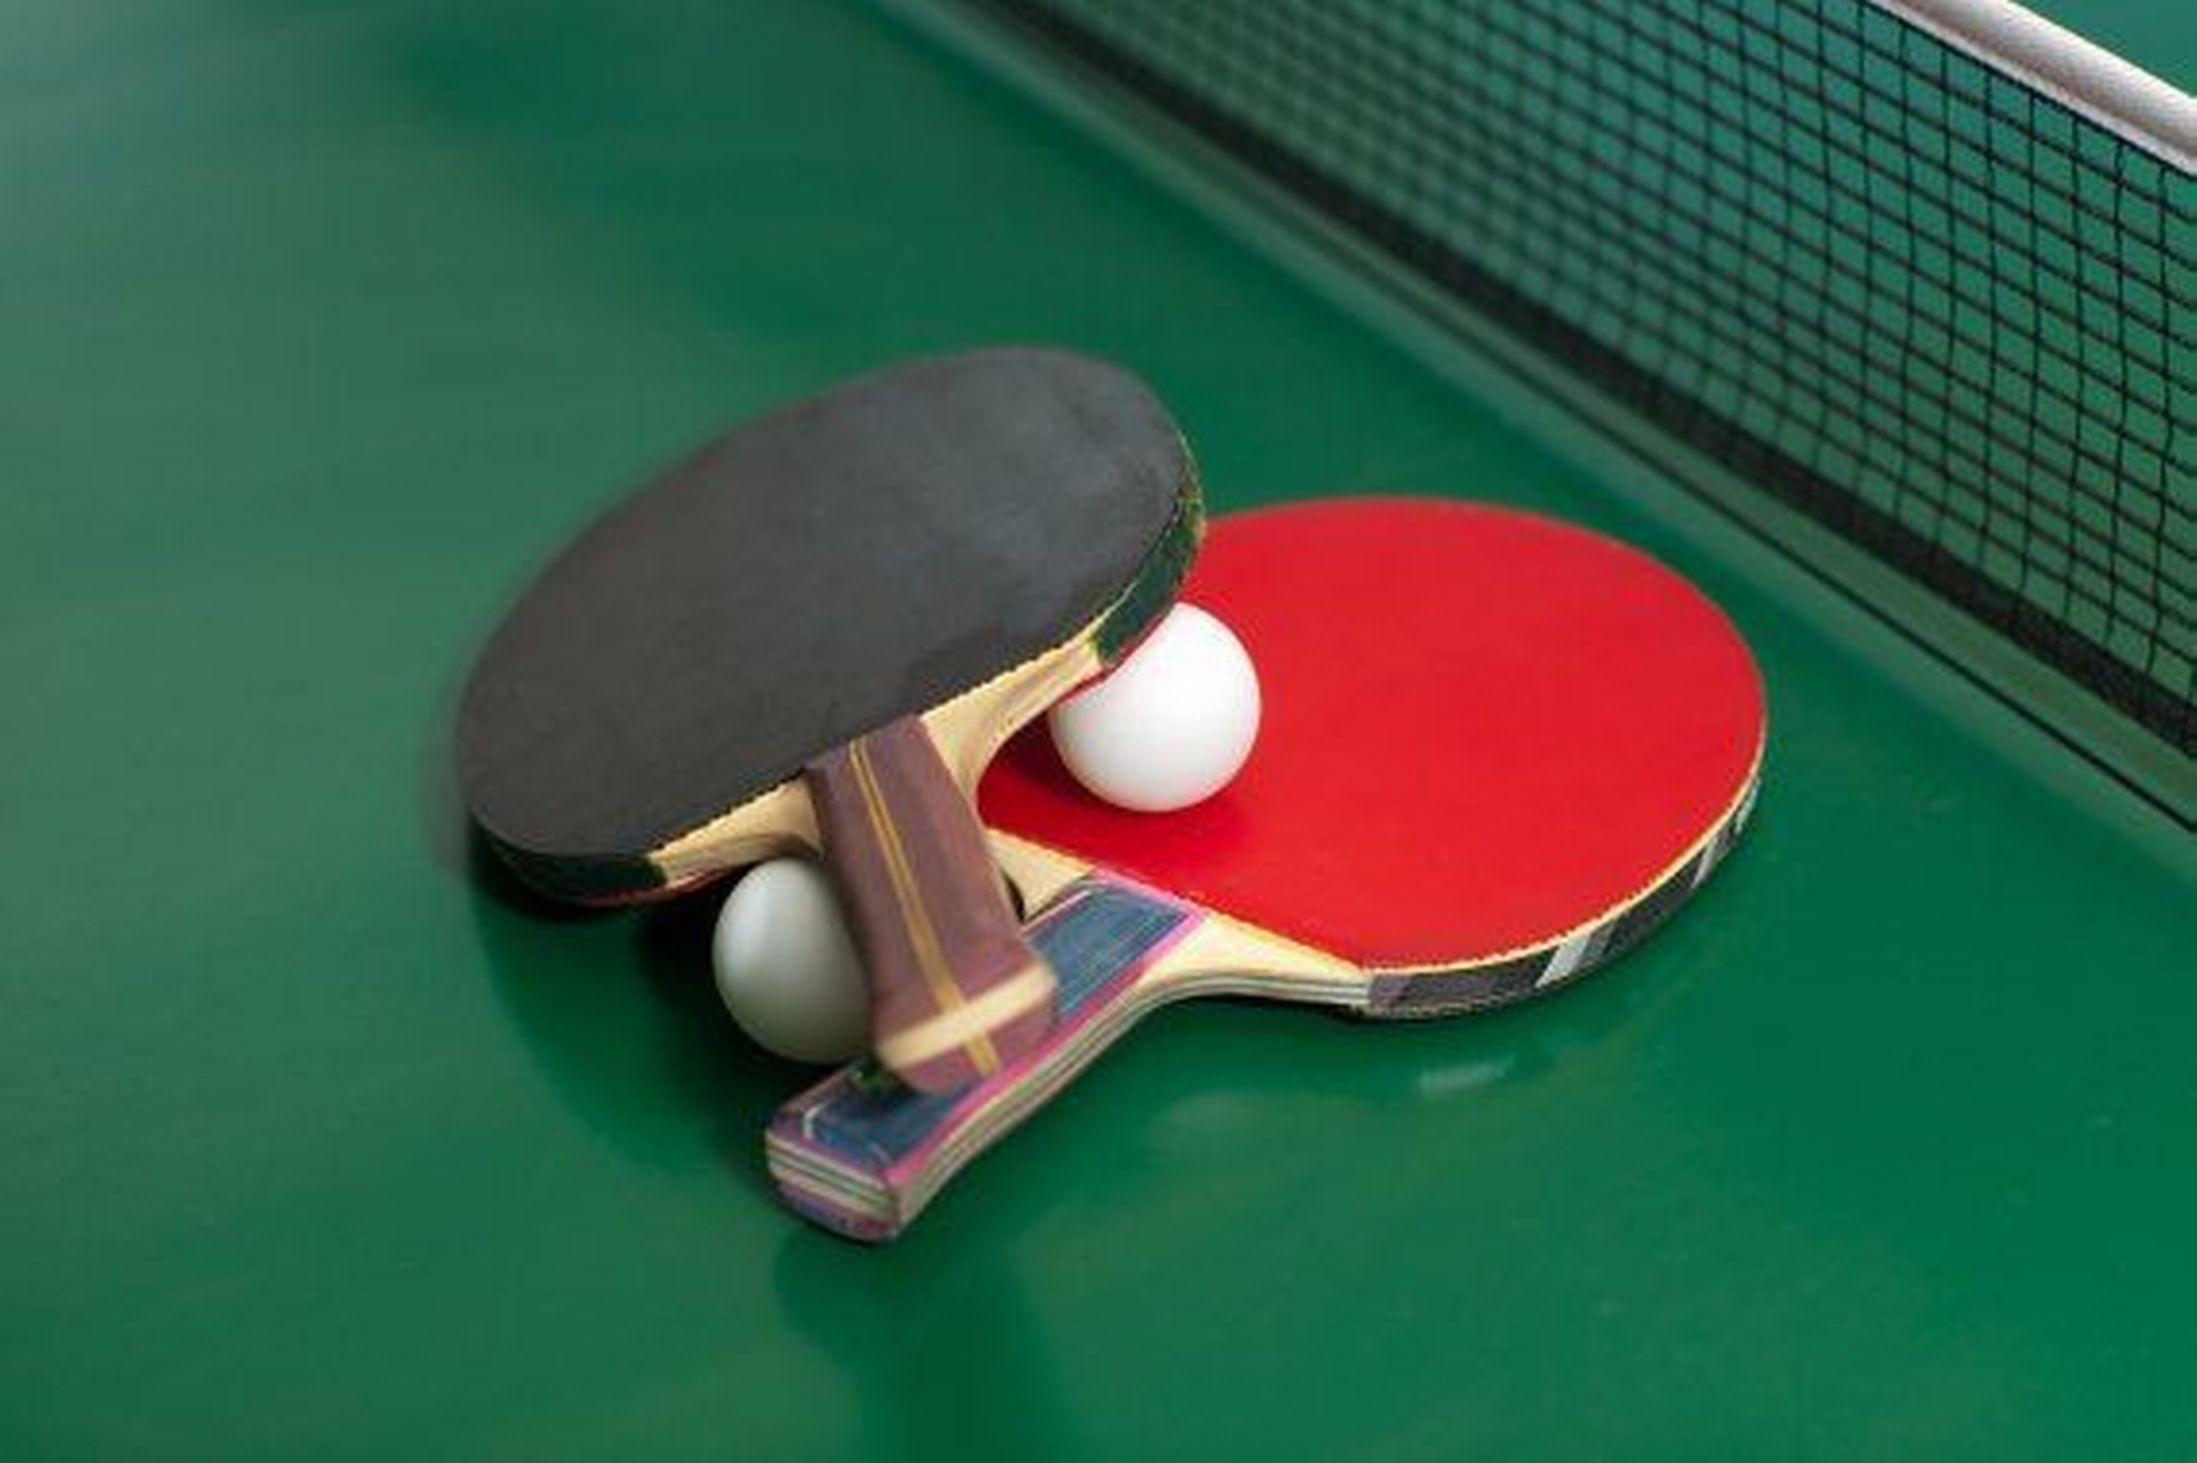 750x491px 133.14 KB Table Tennis